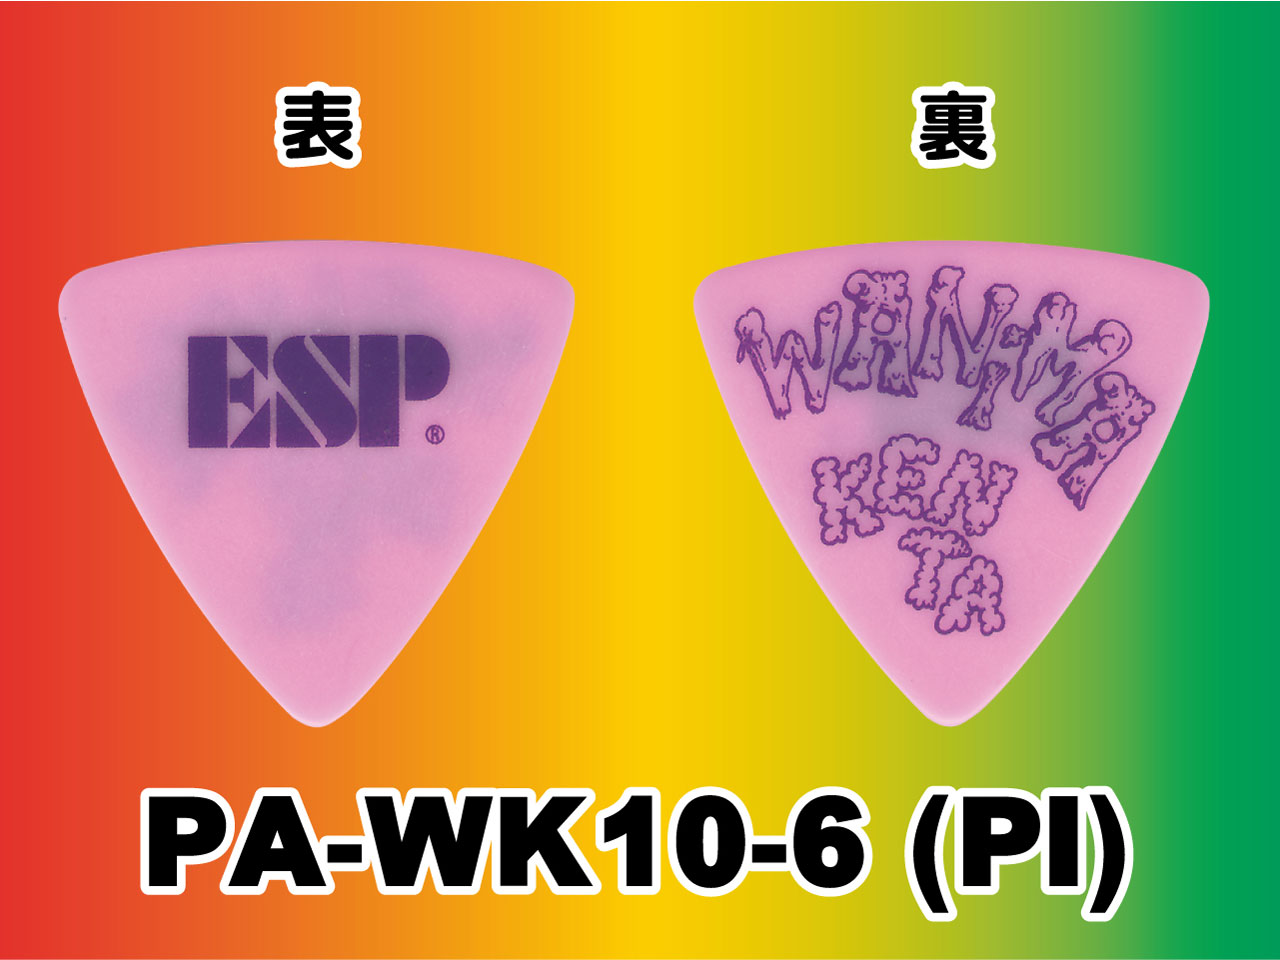 ESP(イーエスピー) Artist Pick Series KENTA Pick フルセット全8種 (WANIMA/KENTA Model)